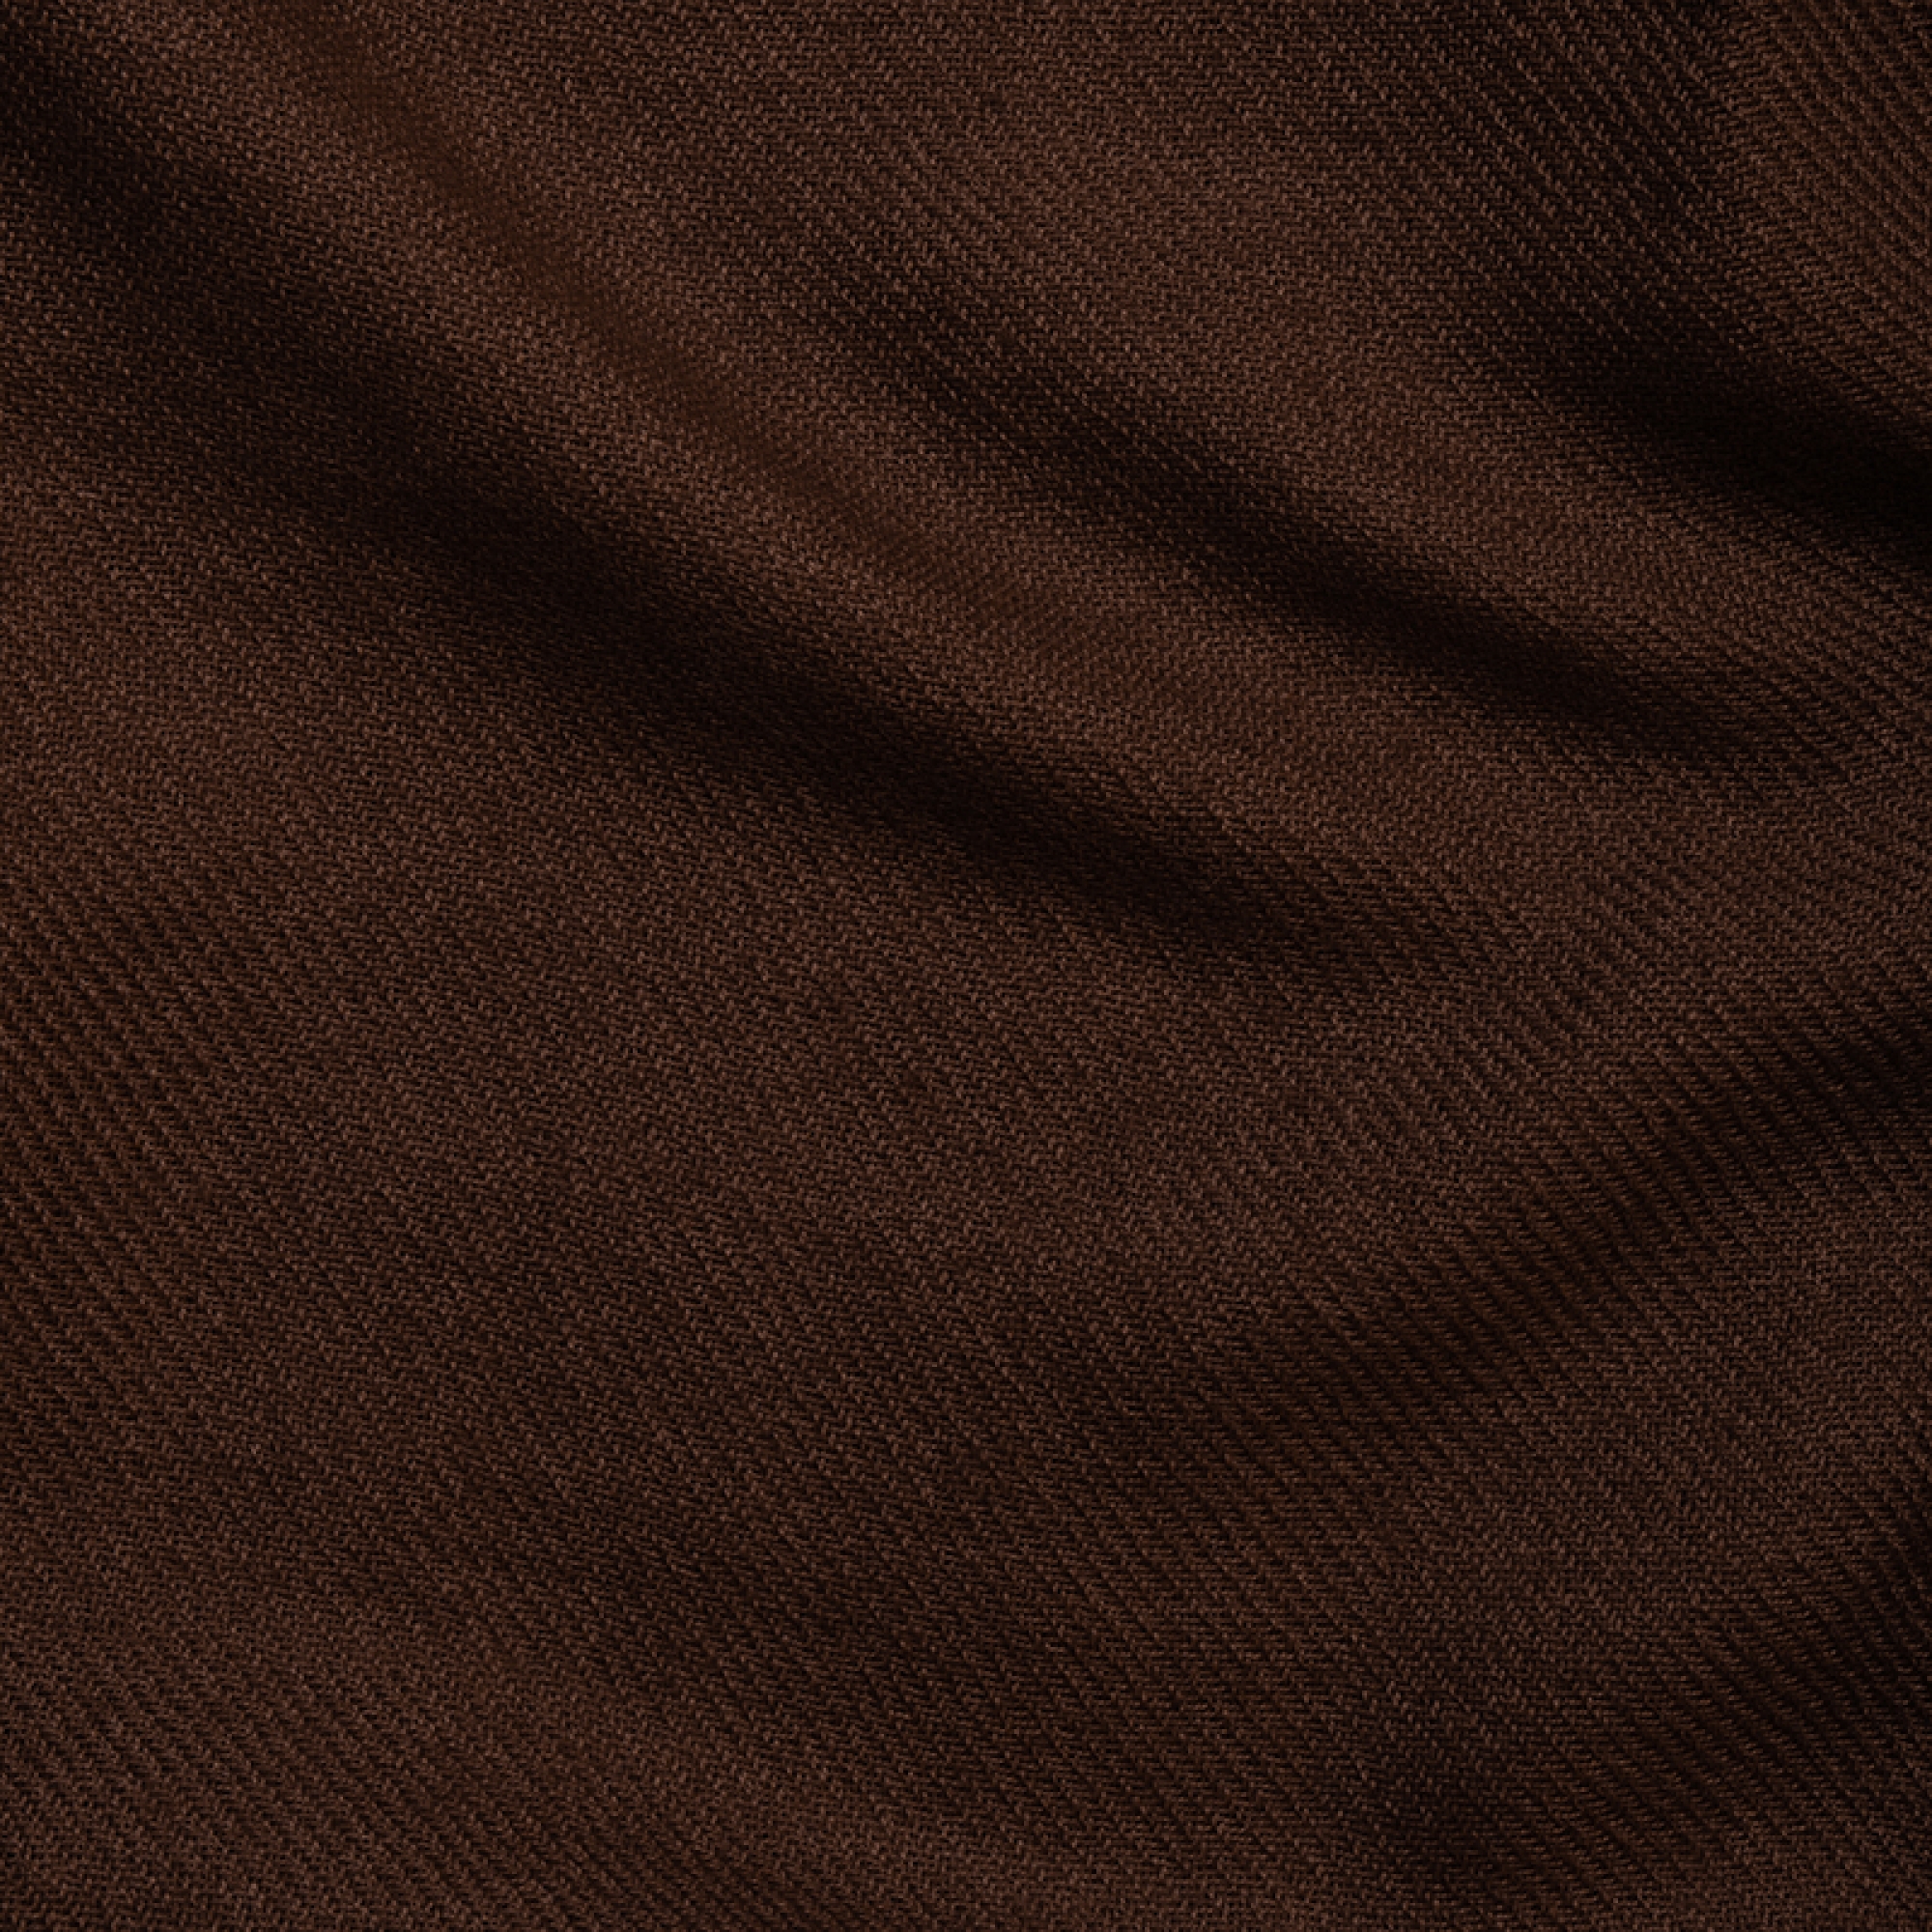 Cashmere accessories toodoo plain l 220 x 220 cacao 220x220cm